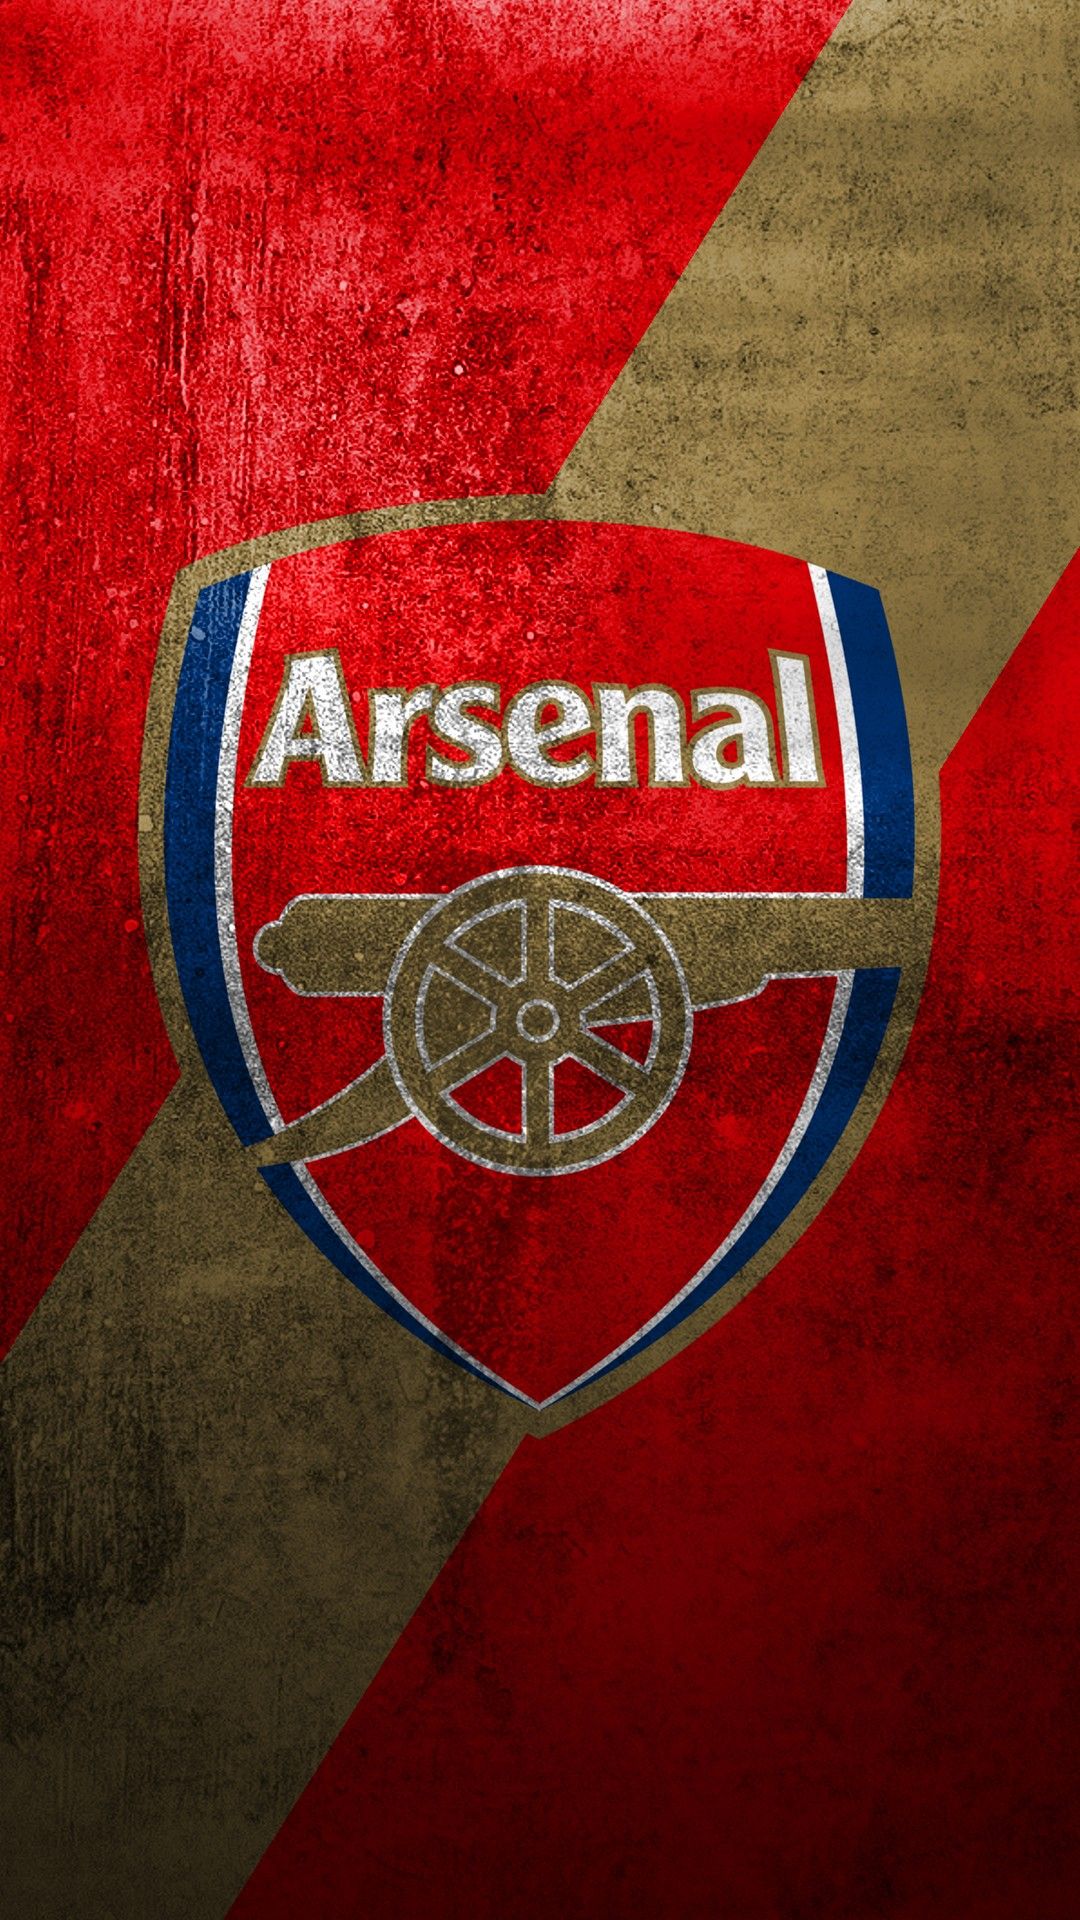 Arsenal Hd Wallpapers